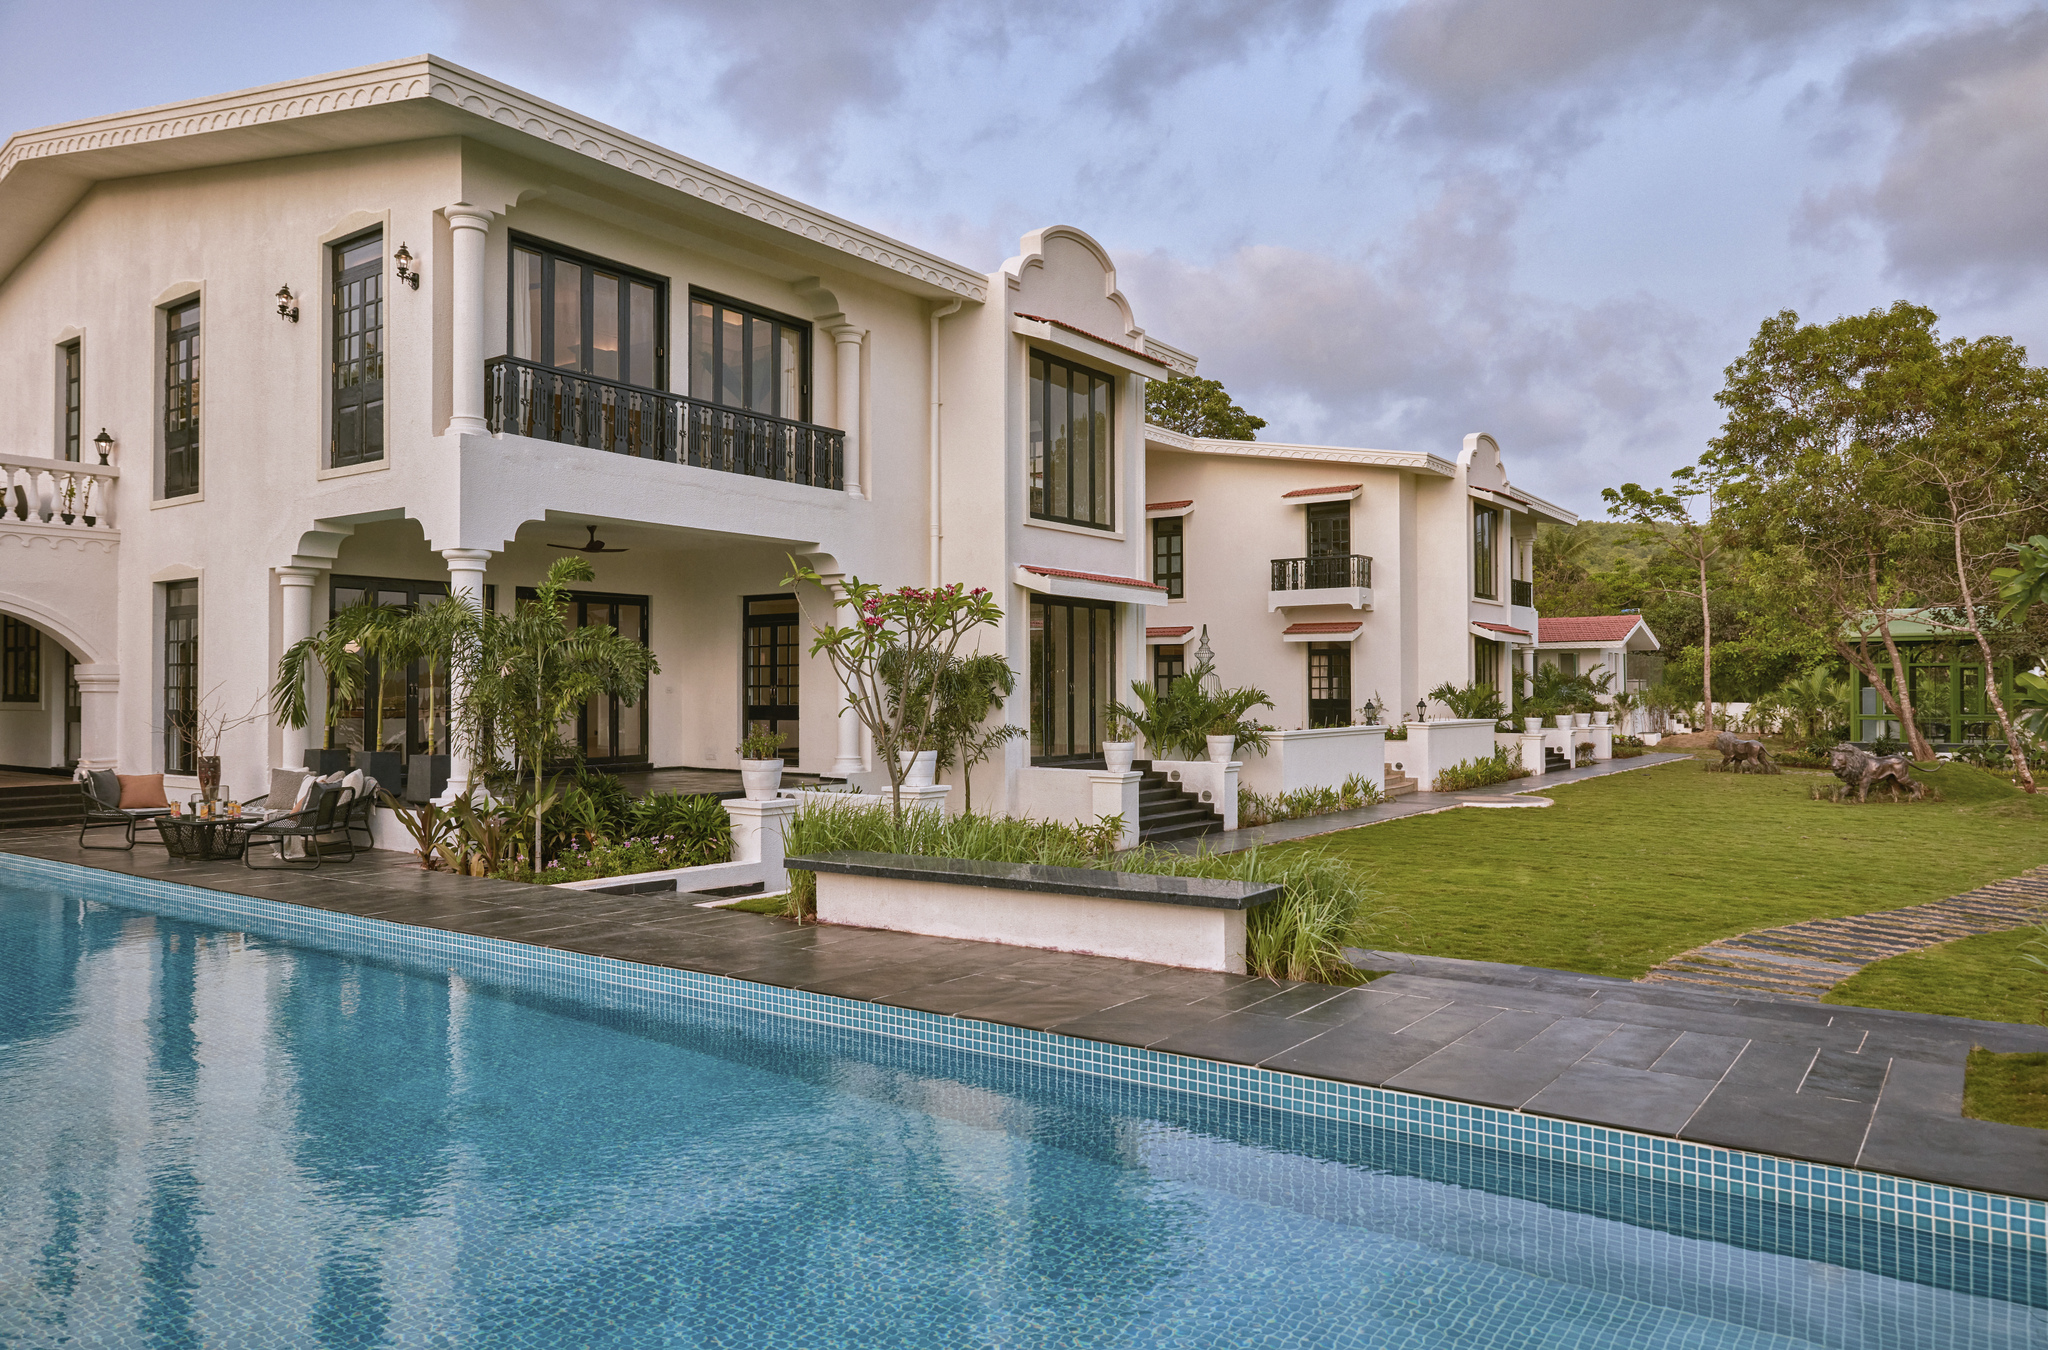 Marriott Homes & Villas property in Goa, India